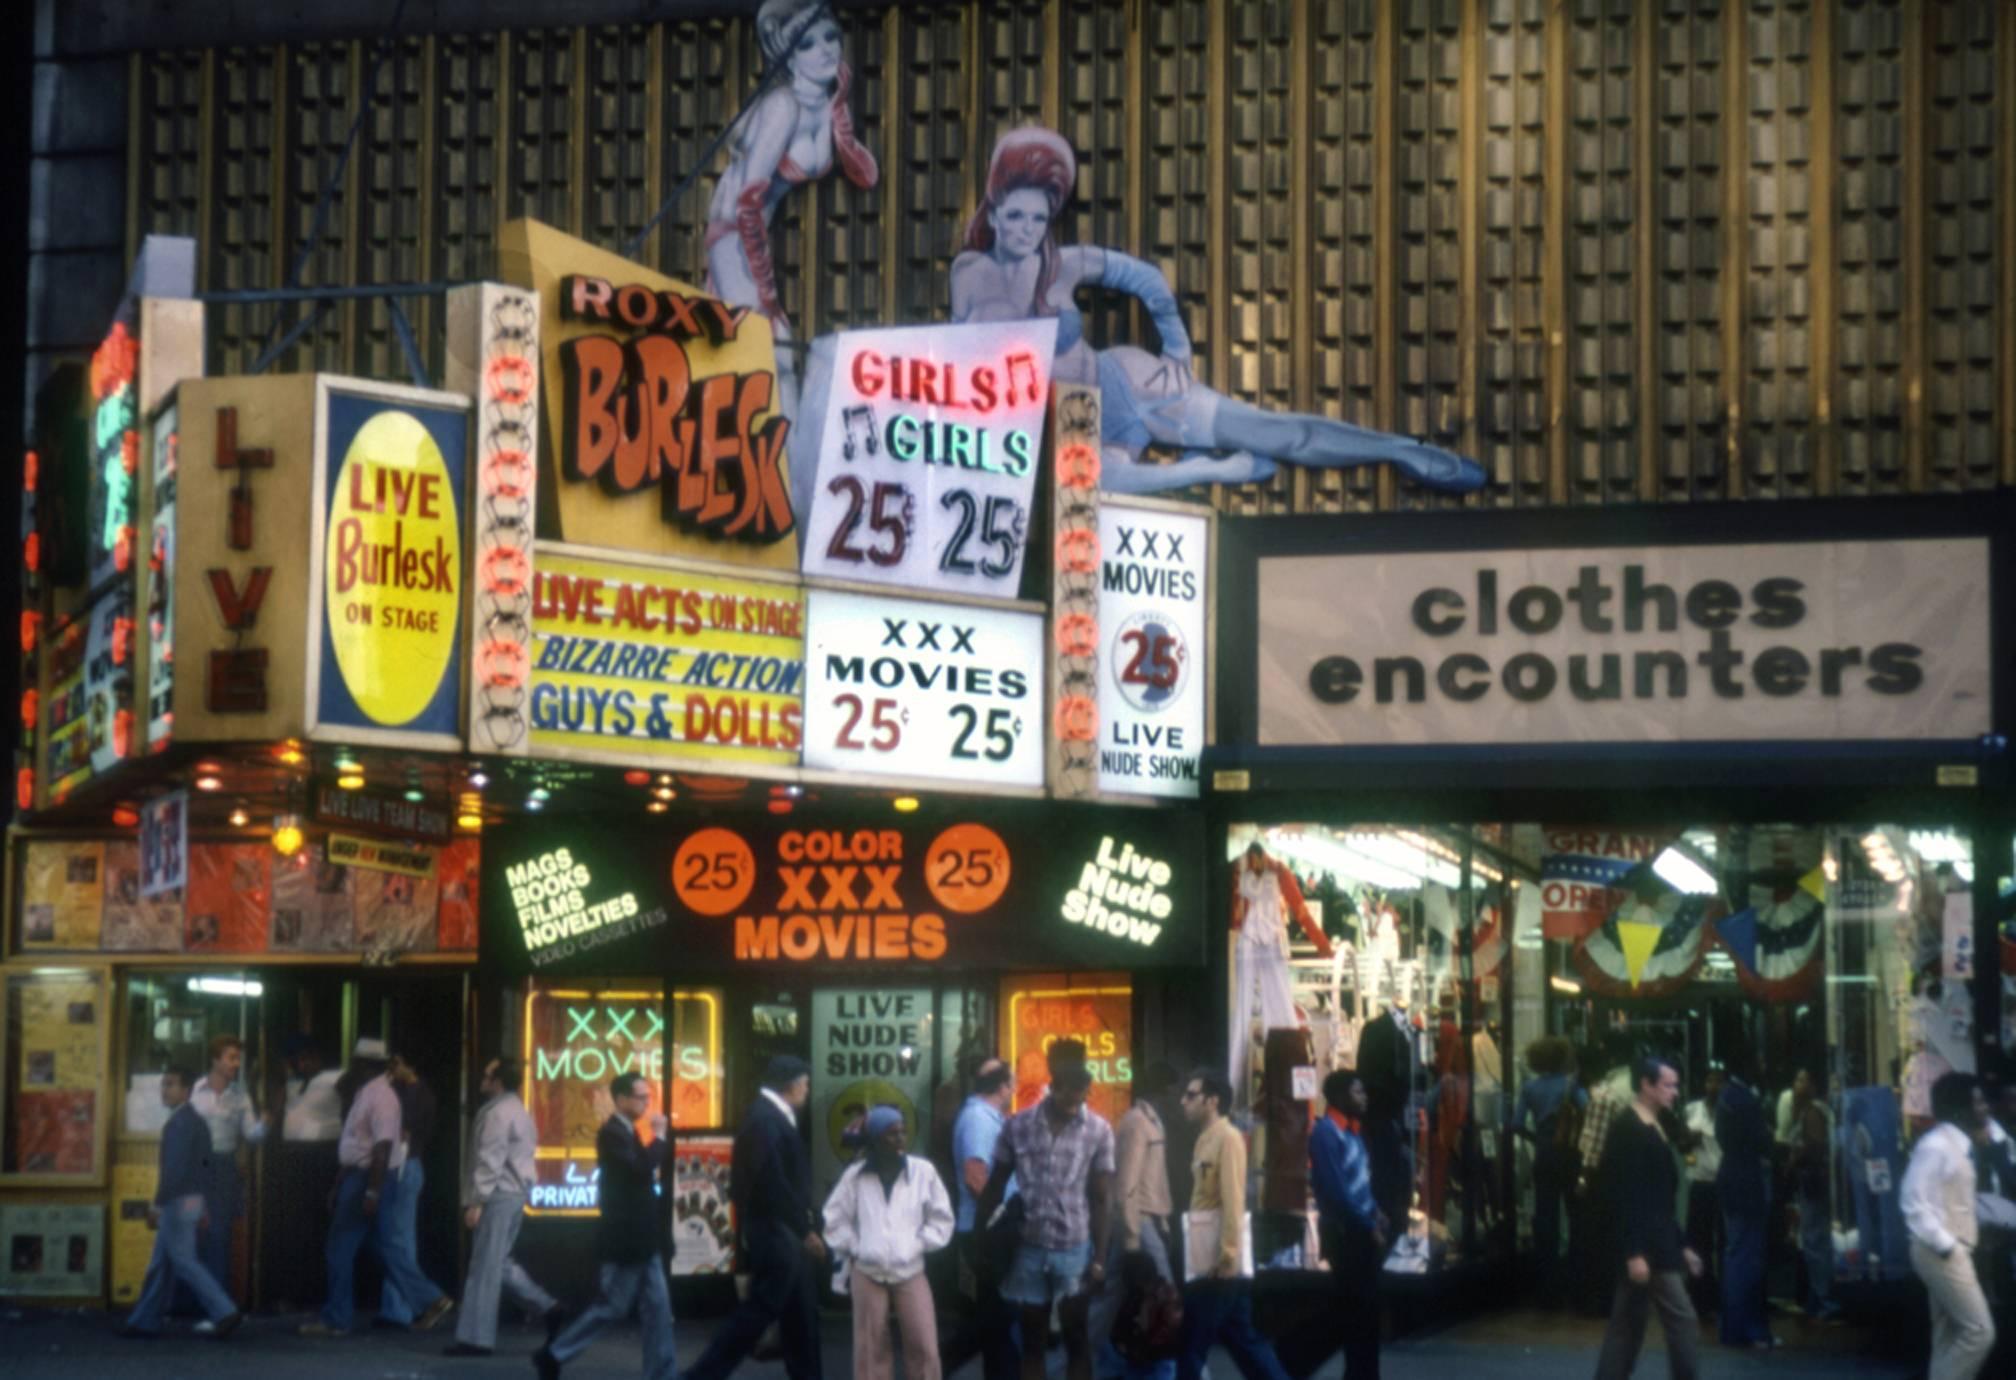 Color Photograph Fernando Natalici - Roxy Burlesque, photo de Times Square, New York, 1978